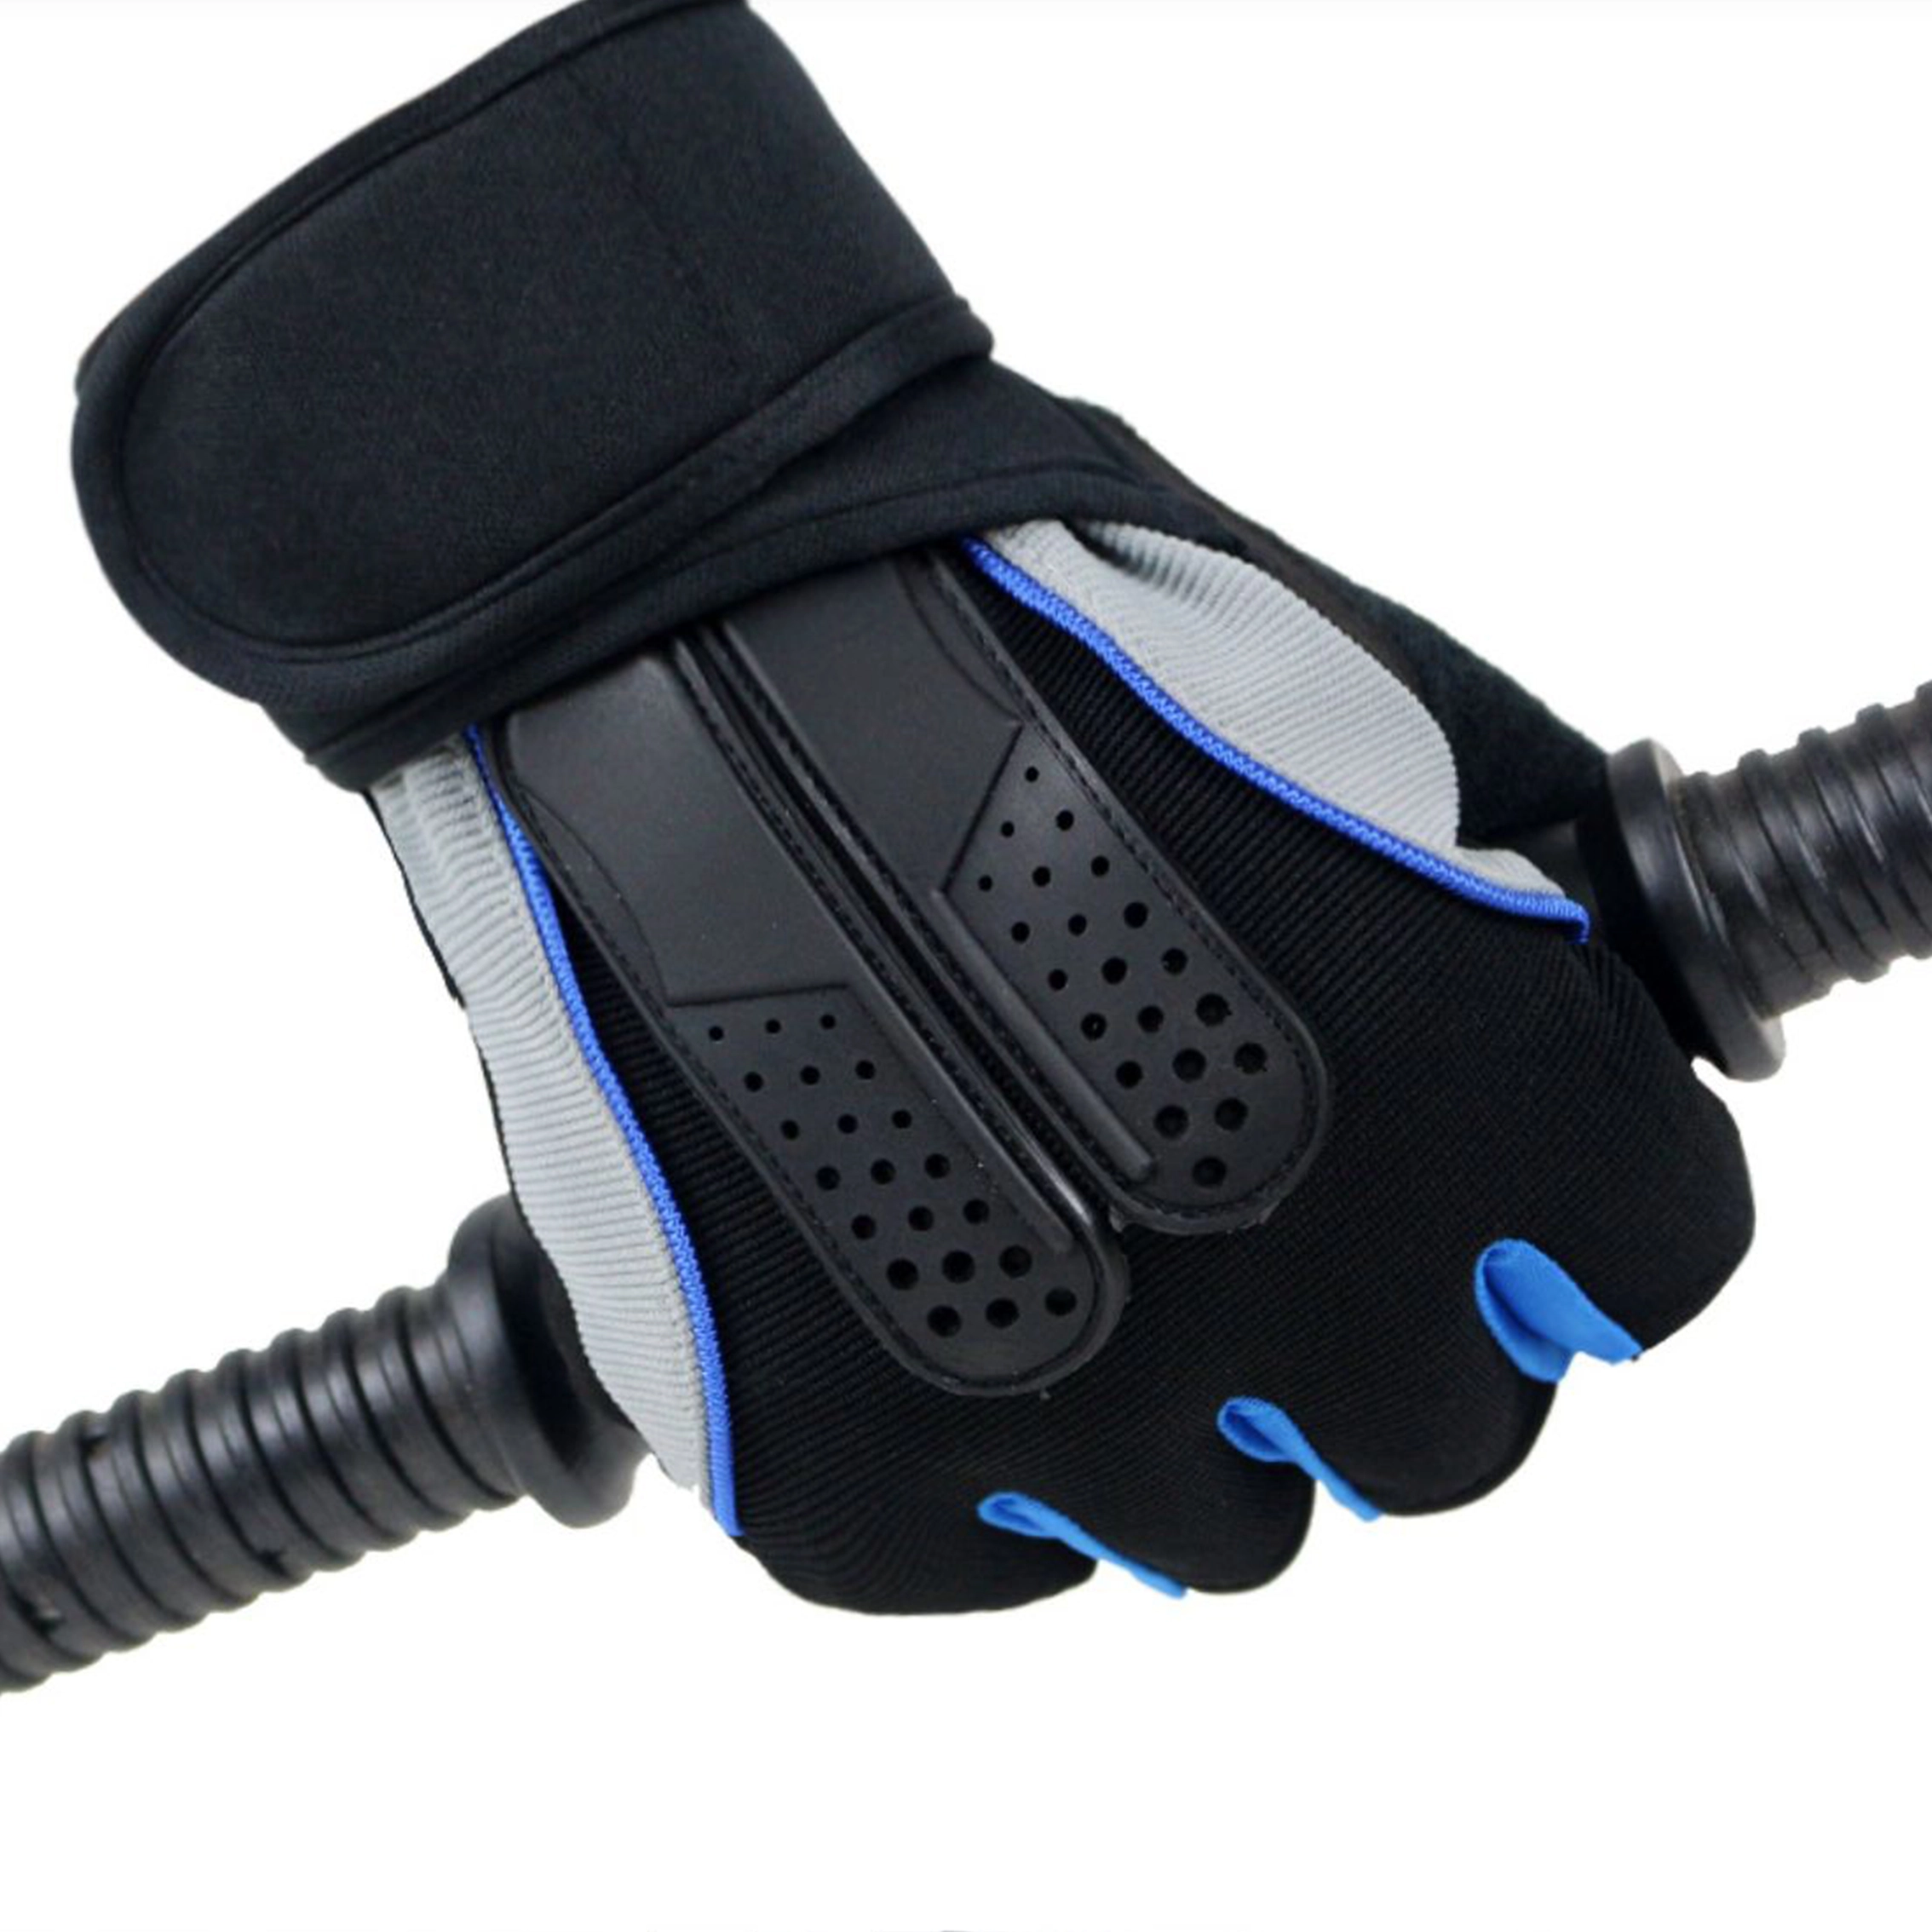 Silicon Gel GYM Gloves